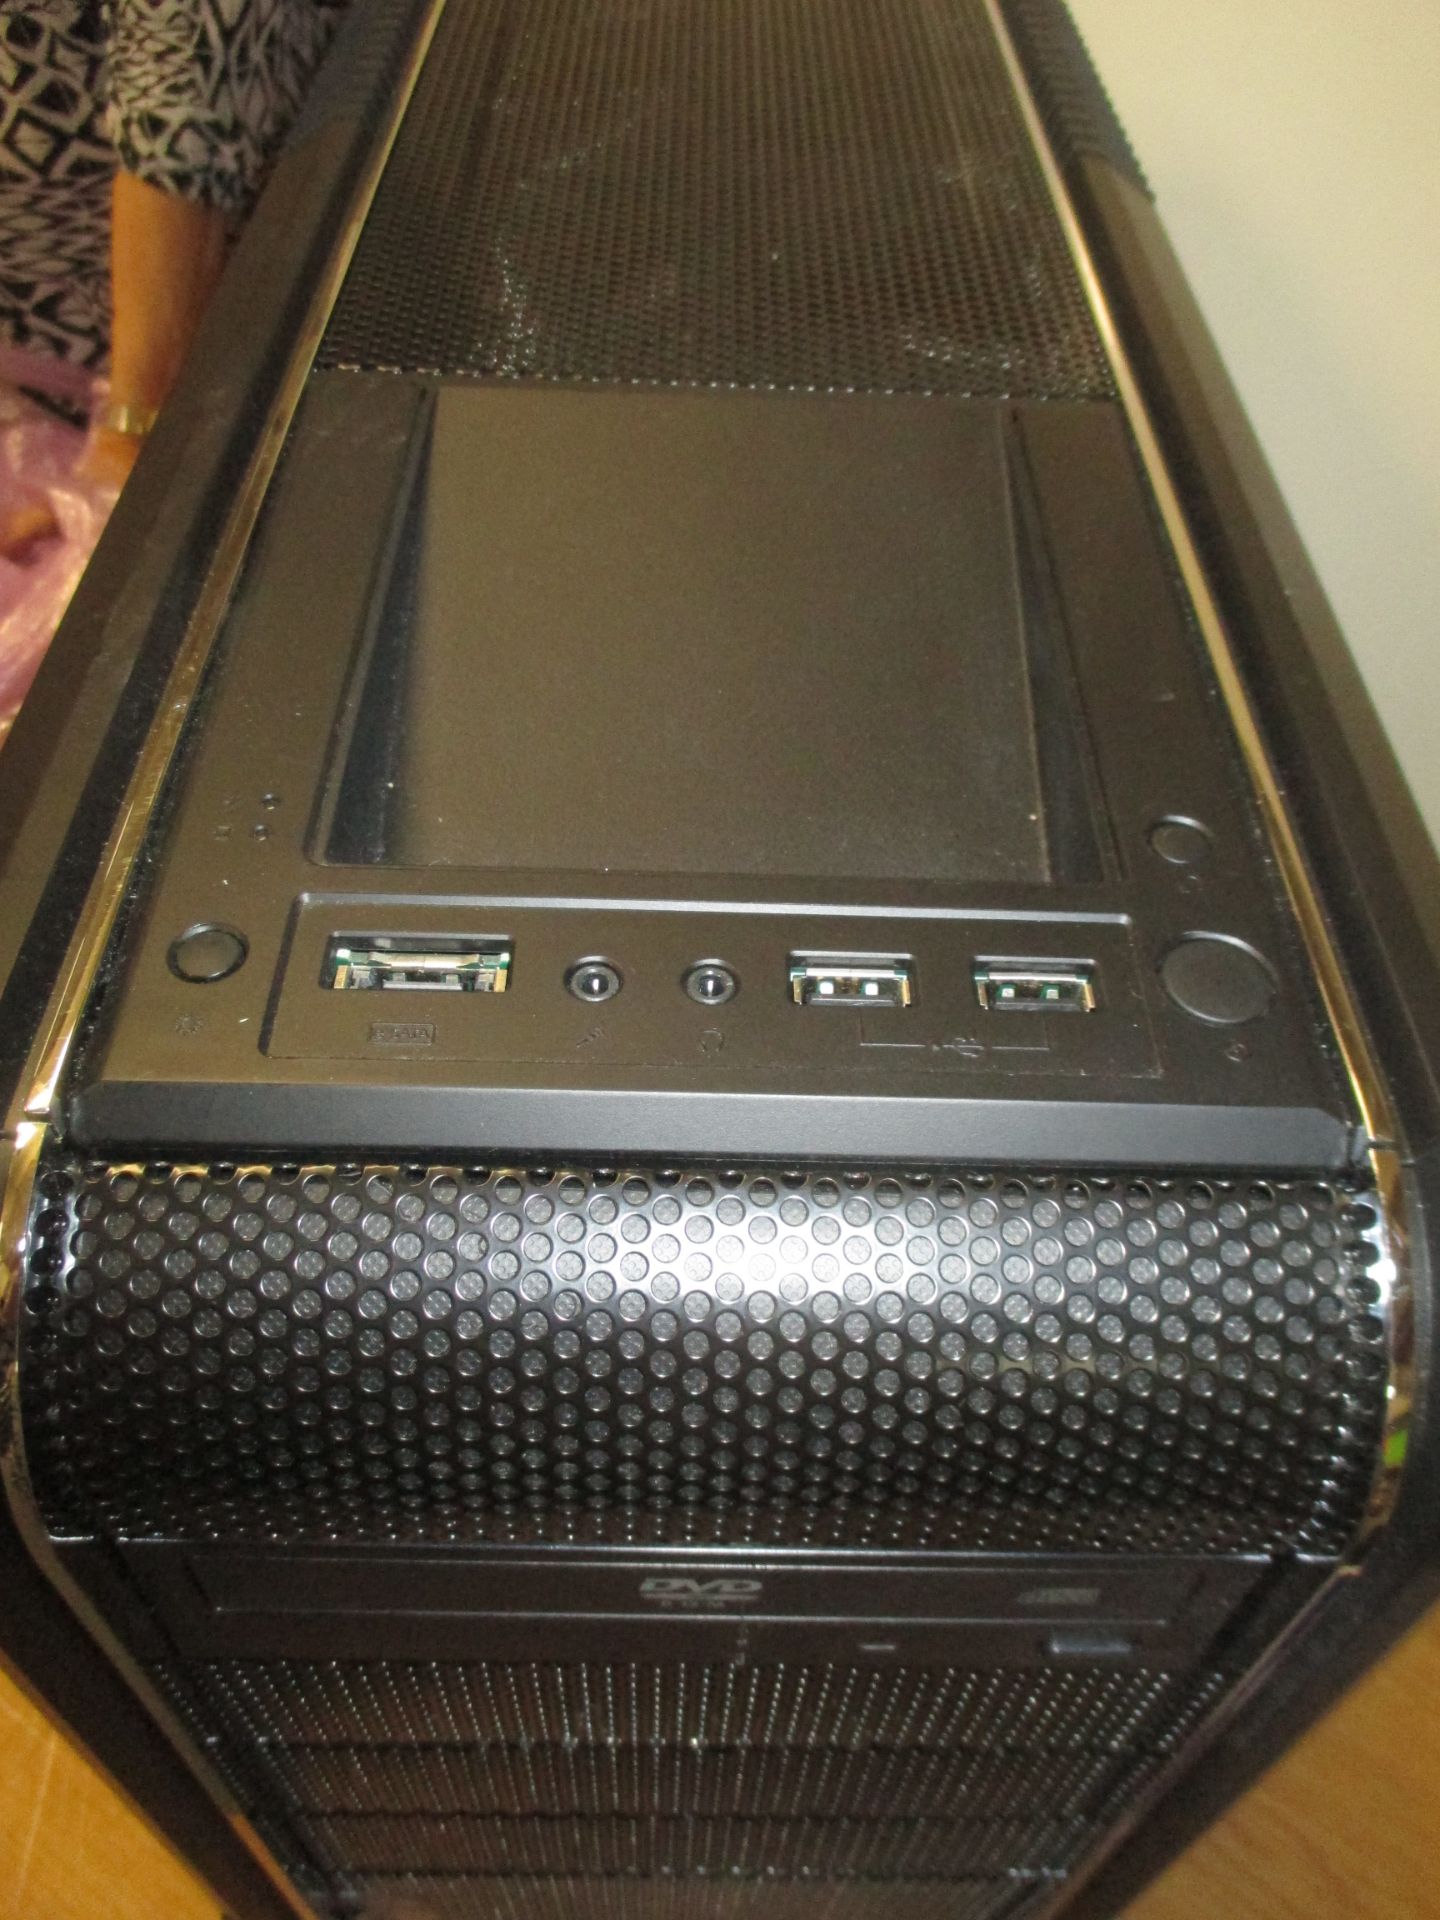 COOLMASTER TOWER COMPUTER. AMD FX6350 6 CORE 3900 PROCESSOR, 8GB RAM/750GB HDD. DVDROM. XFX PSU. - Image 3 of 5